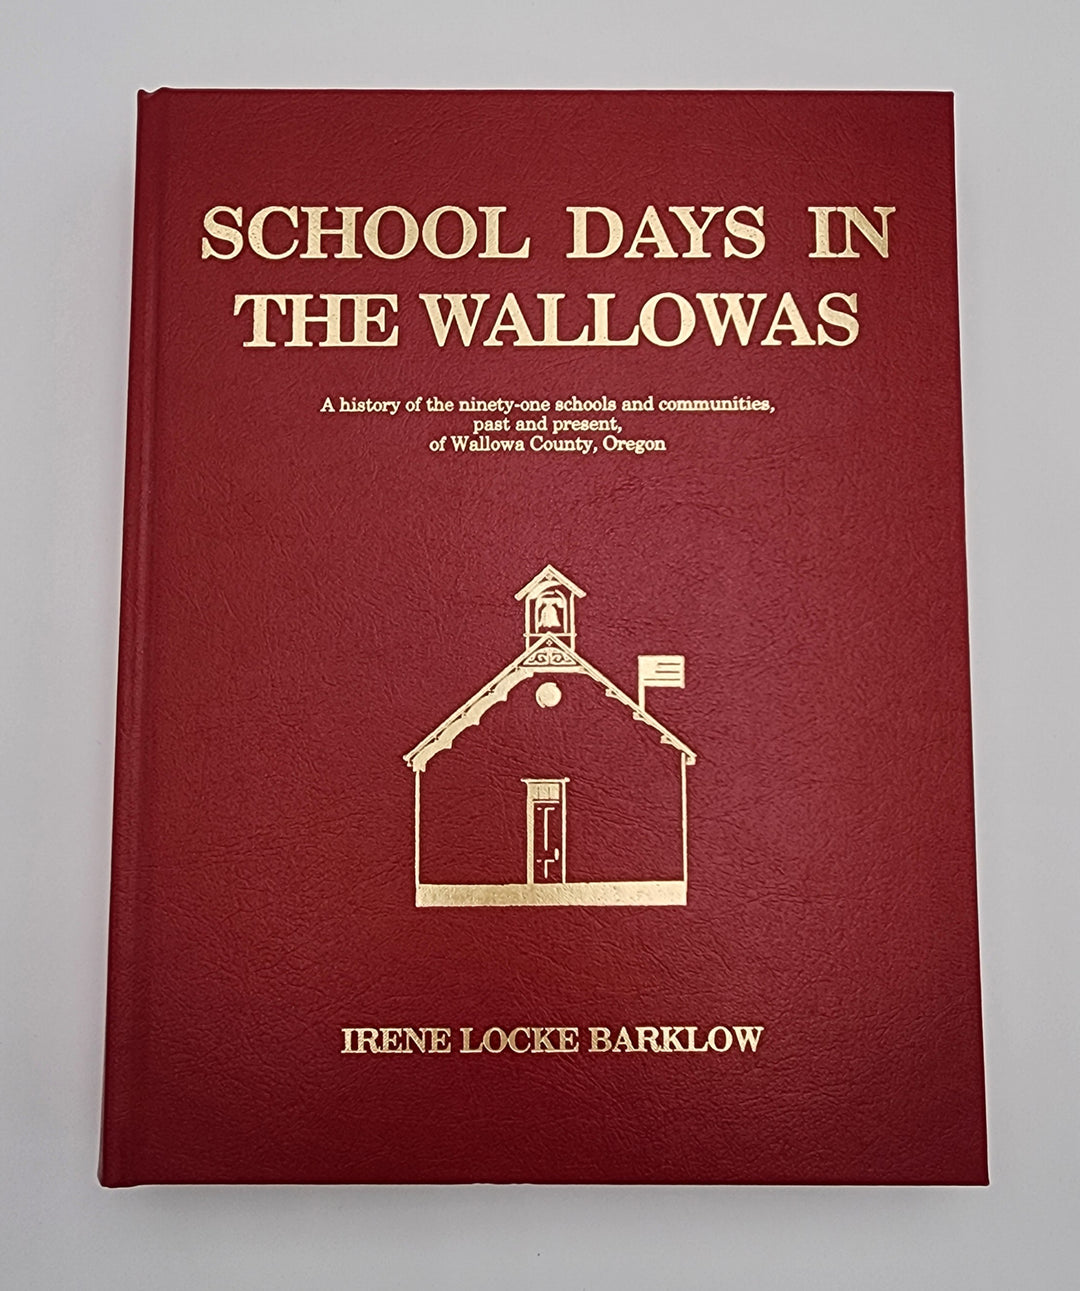 School Days in the Wallowas